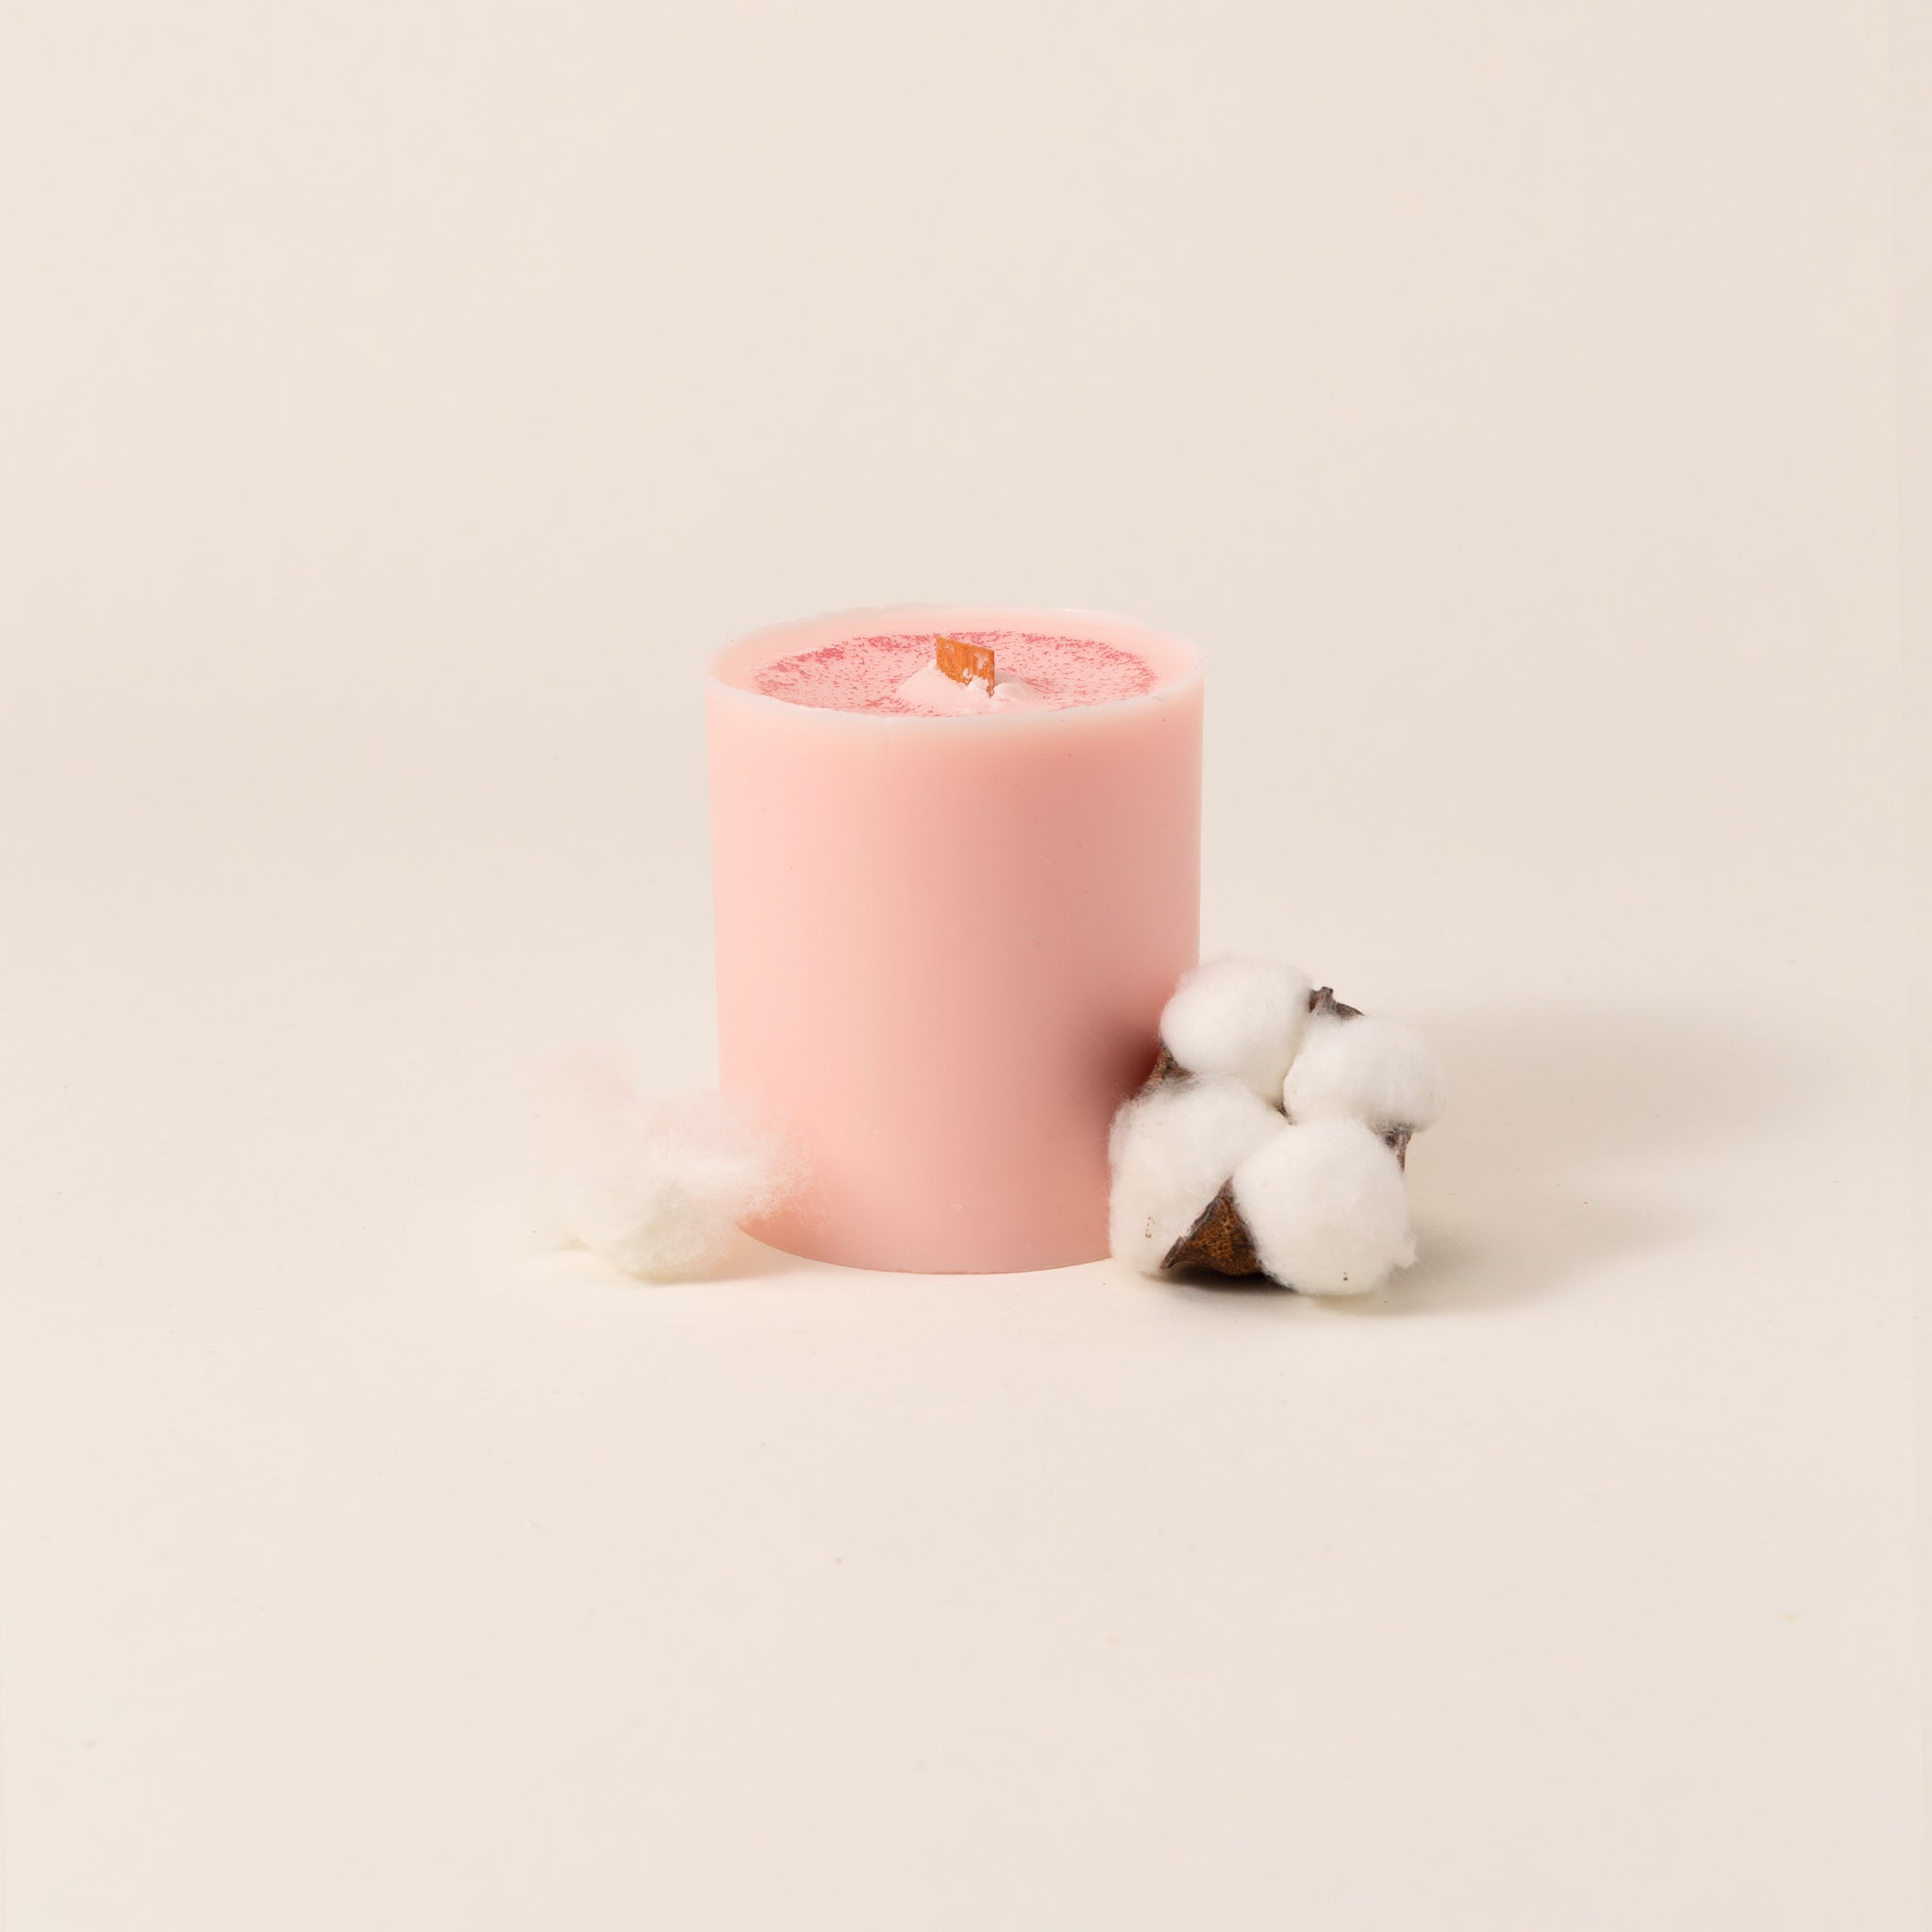 Kit DIY bougie personnalisée - Totem – Candlesbytotem